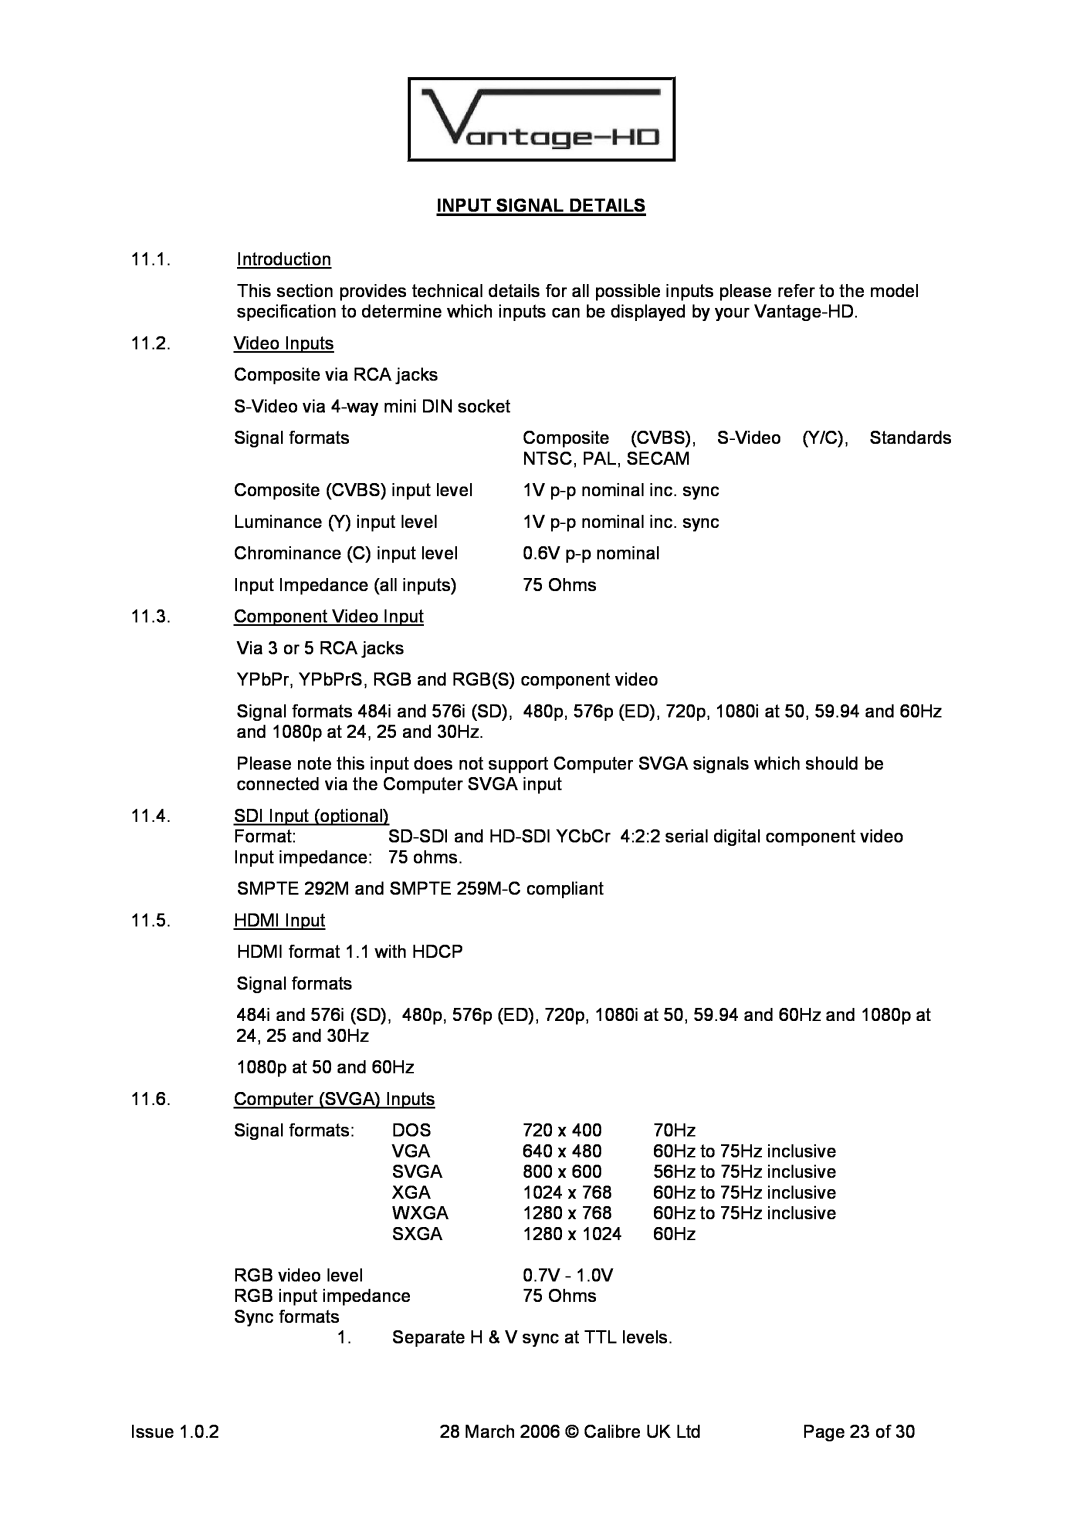 Calibre UK VANTAGE-HD manual Input Signal Details 